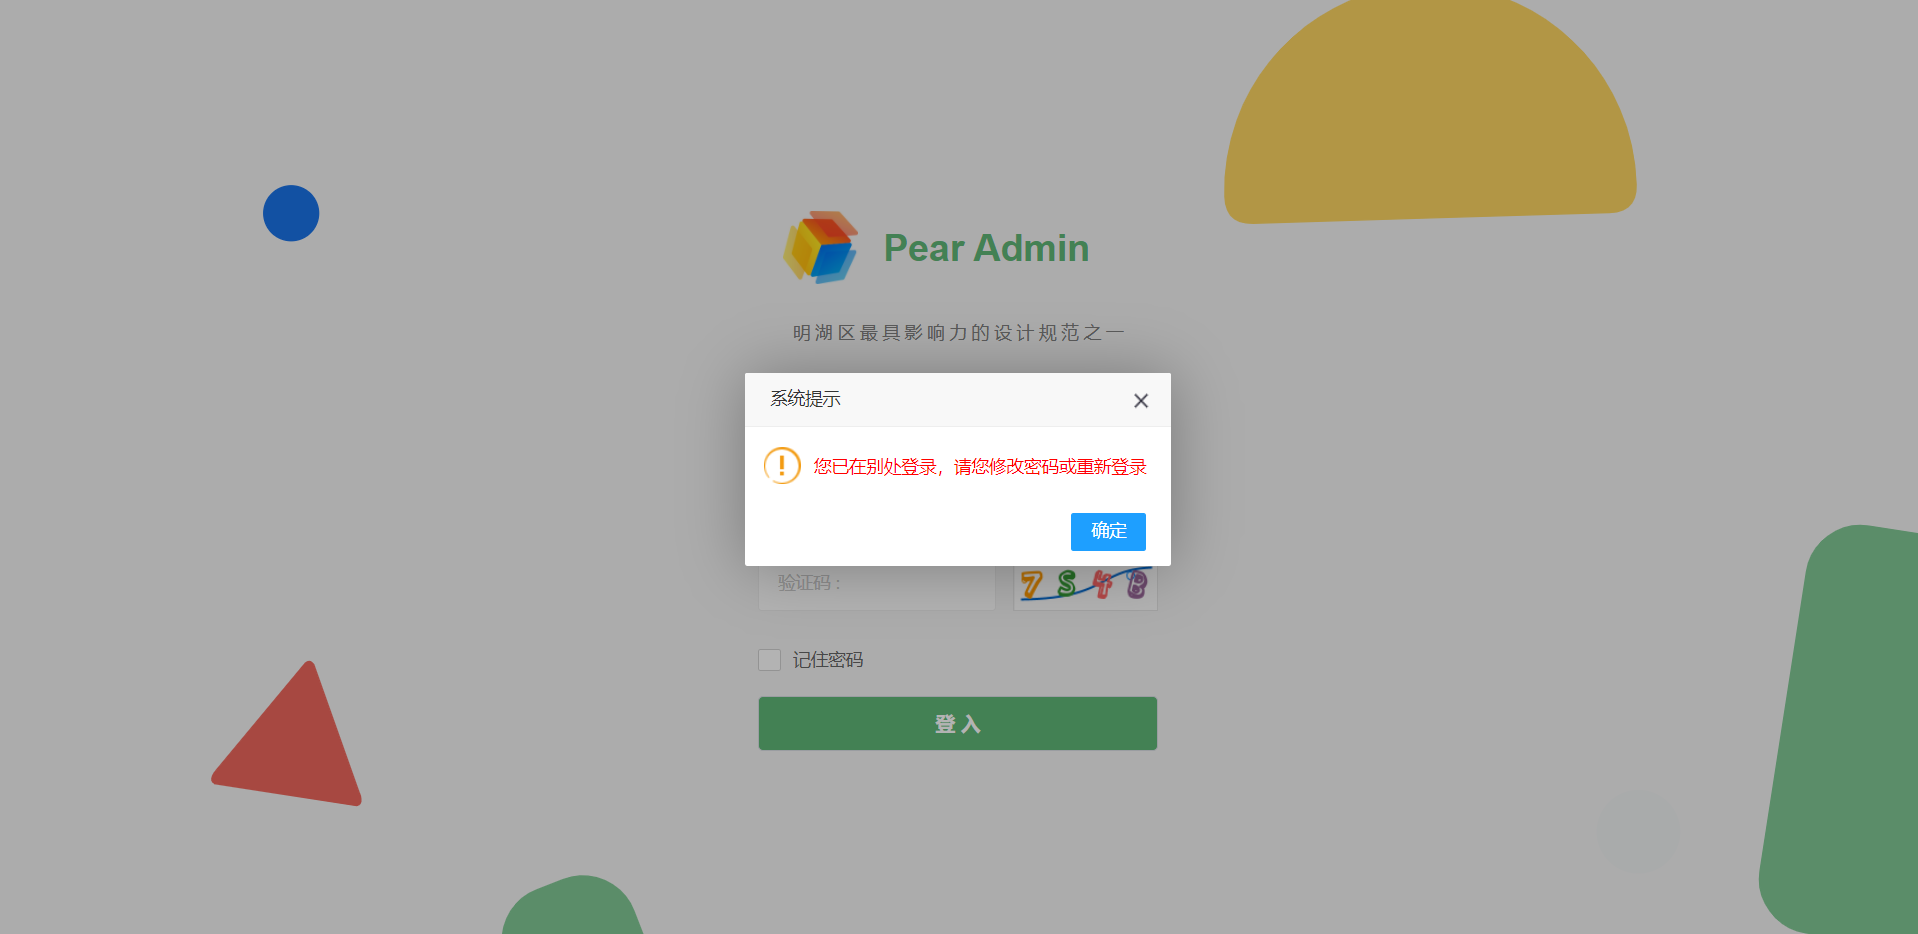 Pear Admin Boot 1.2.0.Release 正式发布，新增头像上传，环境监控